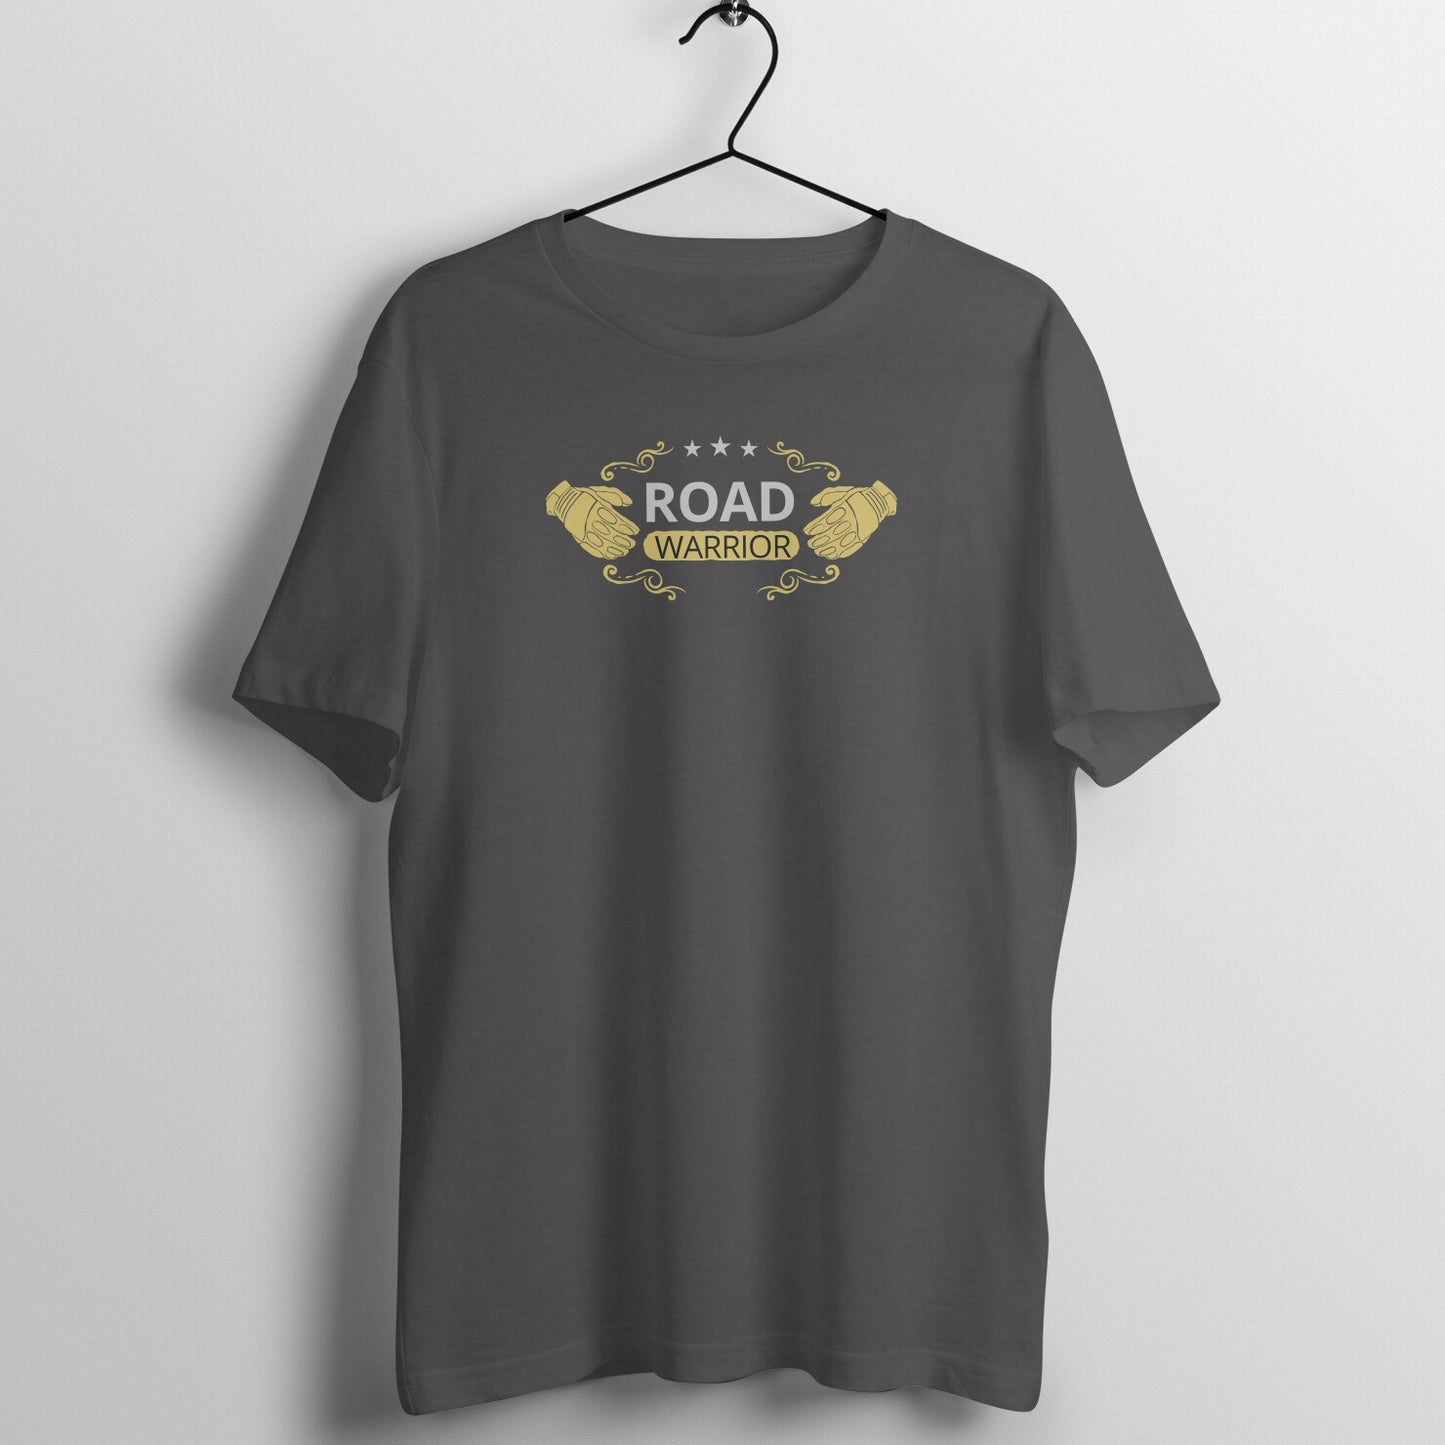 Bilkool Road Warrior Cotton Half Sleeve T-Shirt